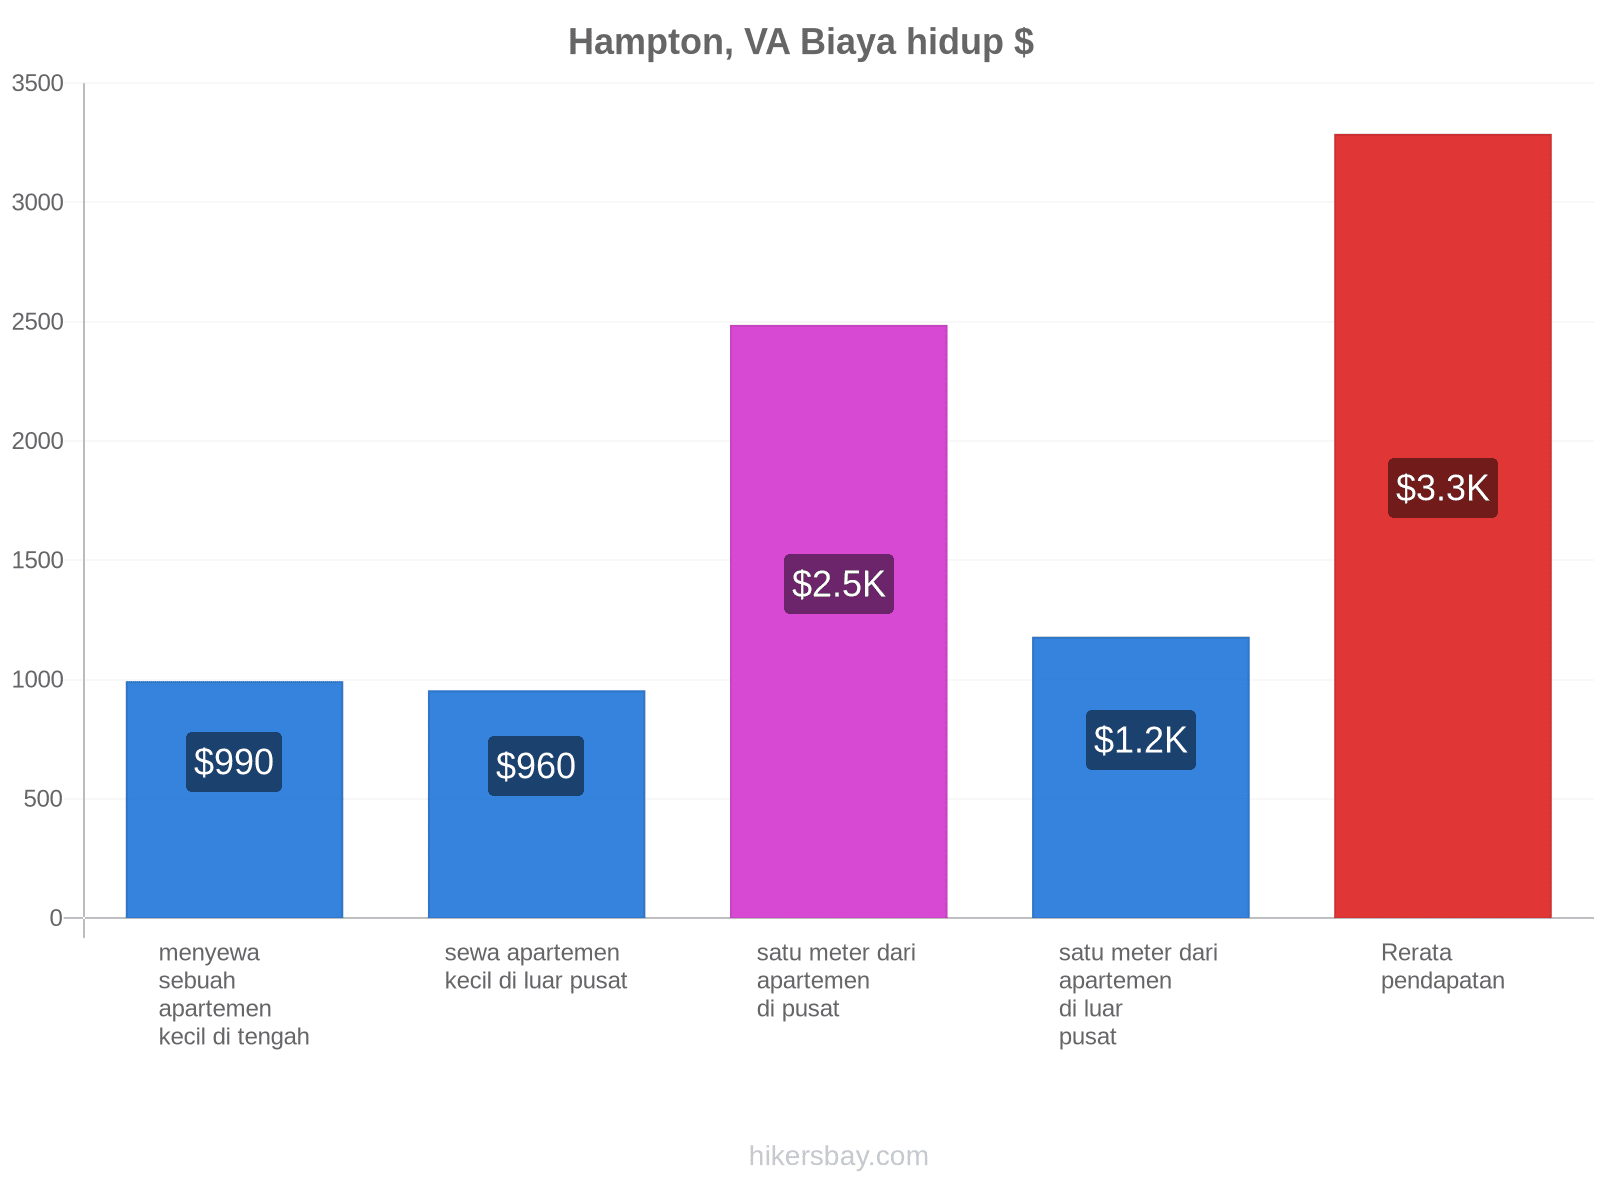 Hampton, VA biaya hidup hikersbay.com